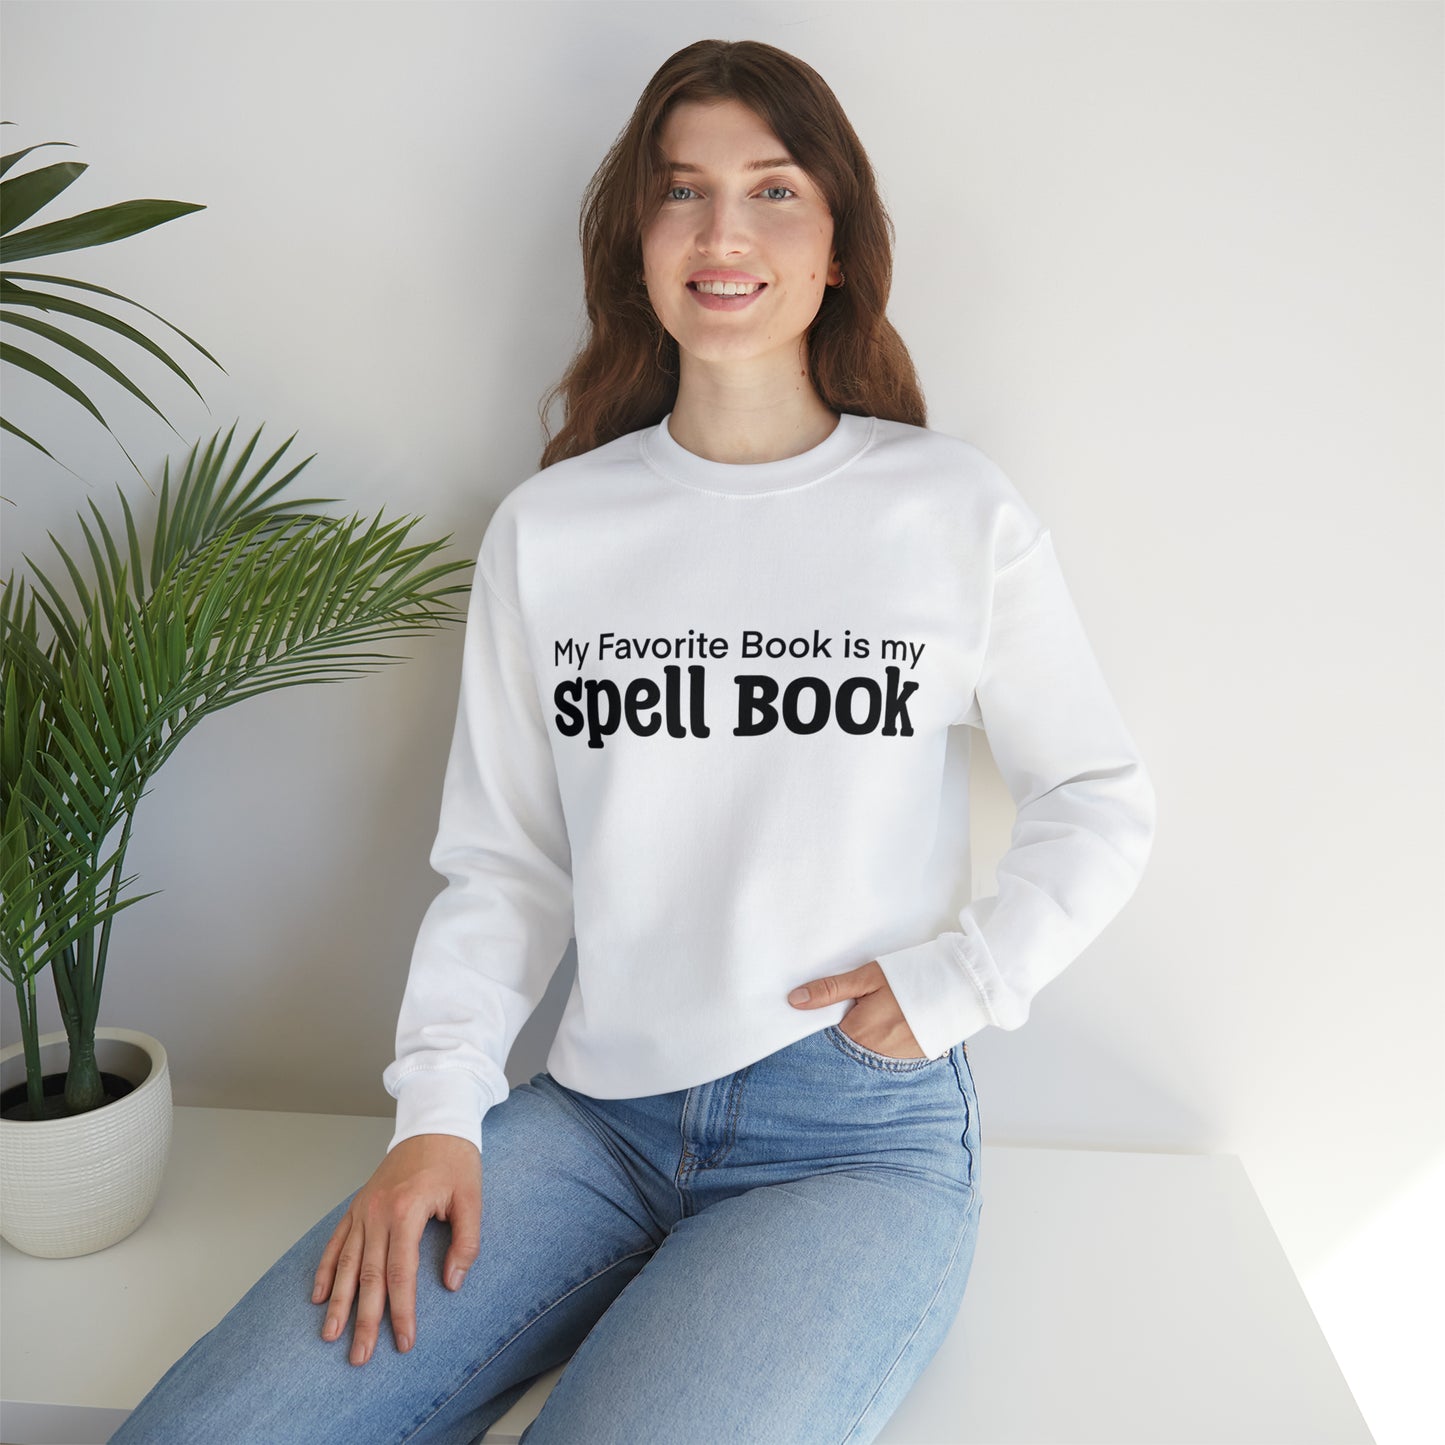 My Favorite Book is my Spell Book Crewneck Sweatshirt